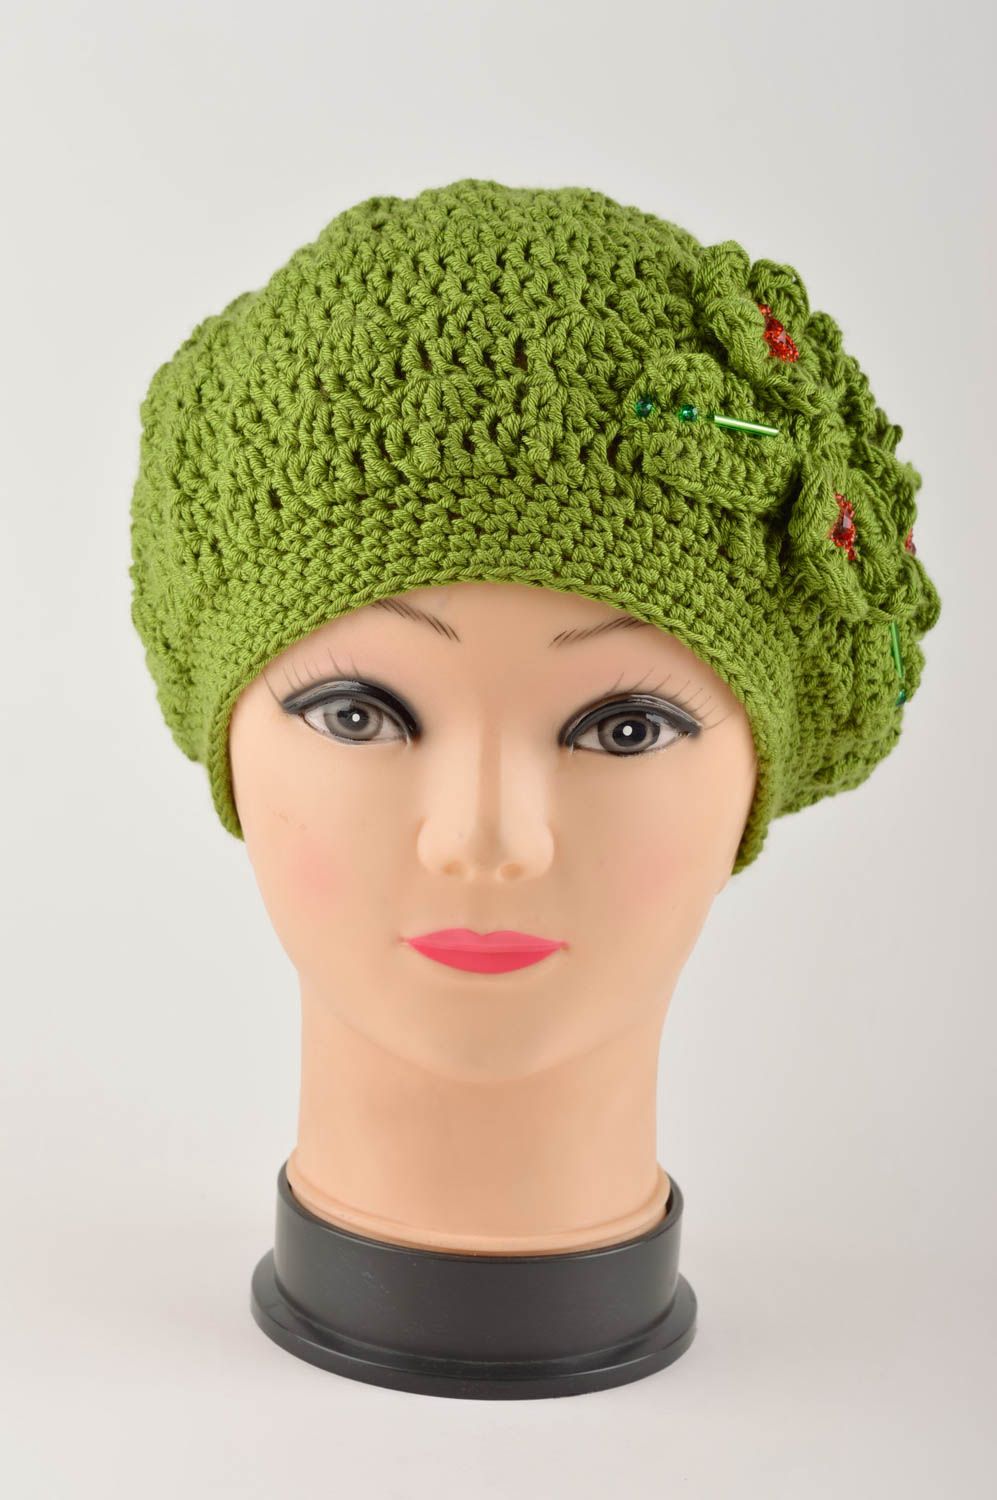 Handmade crochet hat womens hat designer accessories for women gifts for girls photo 3